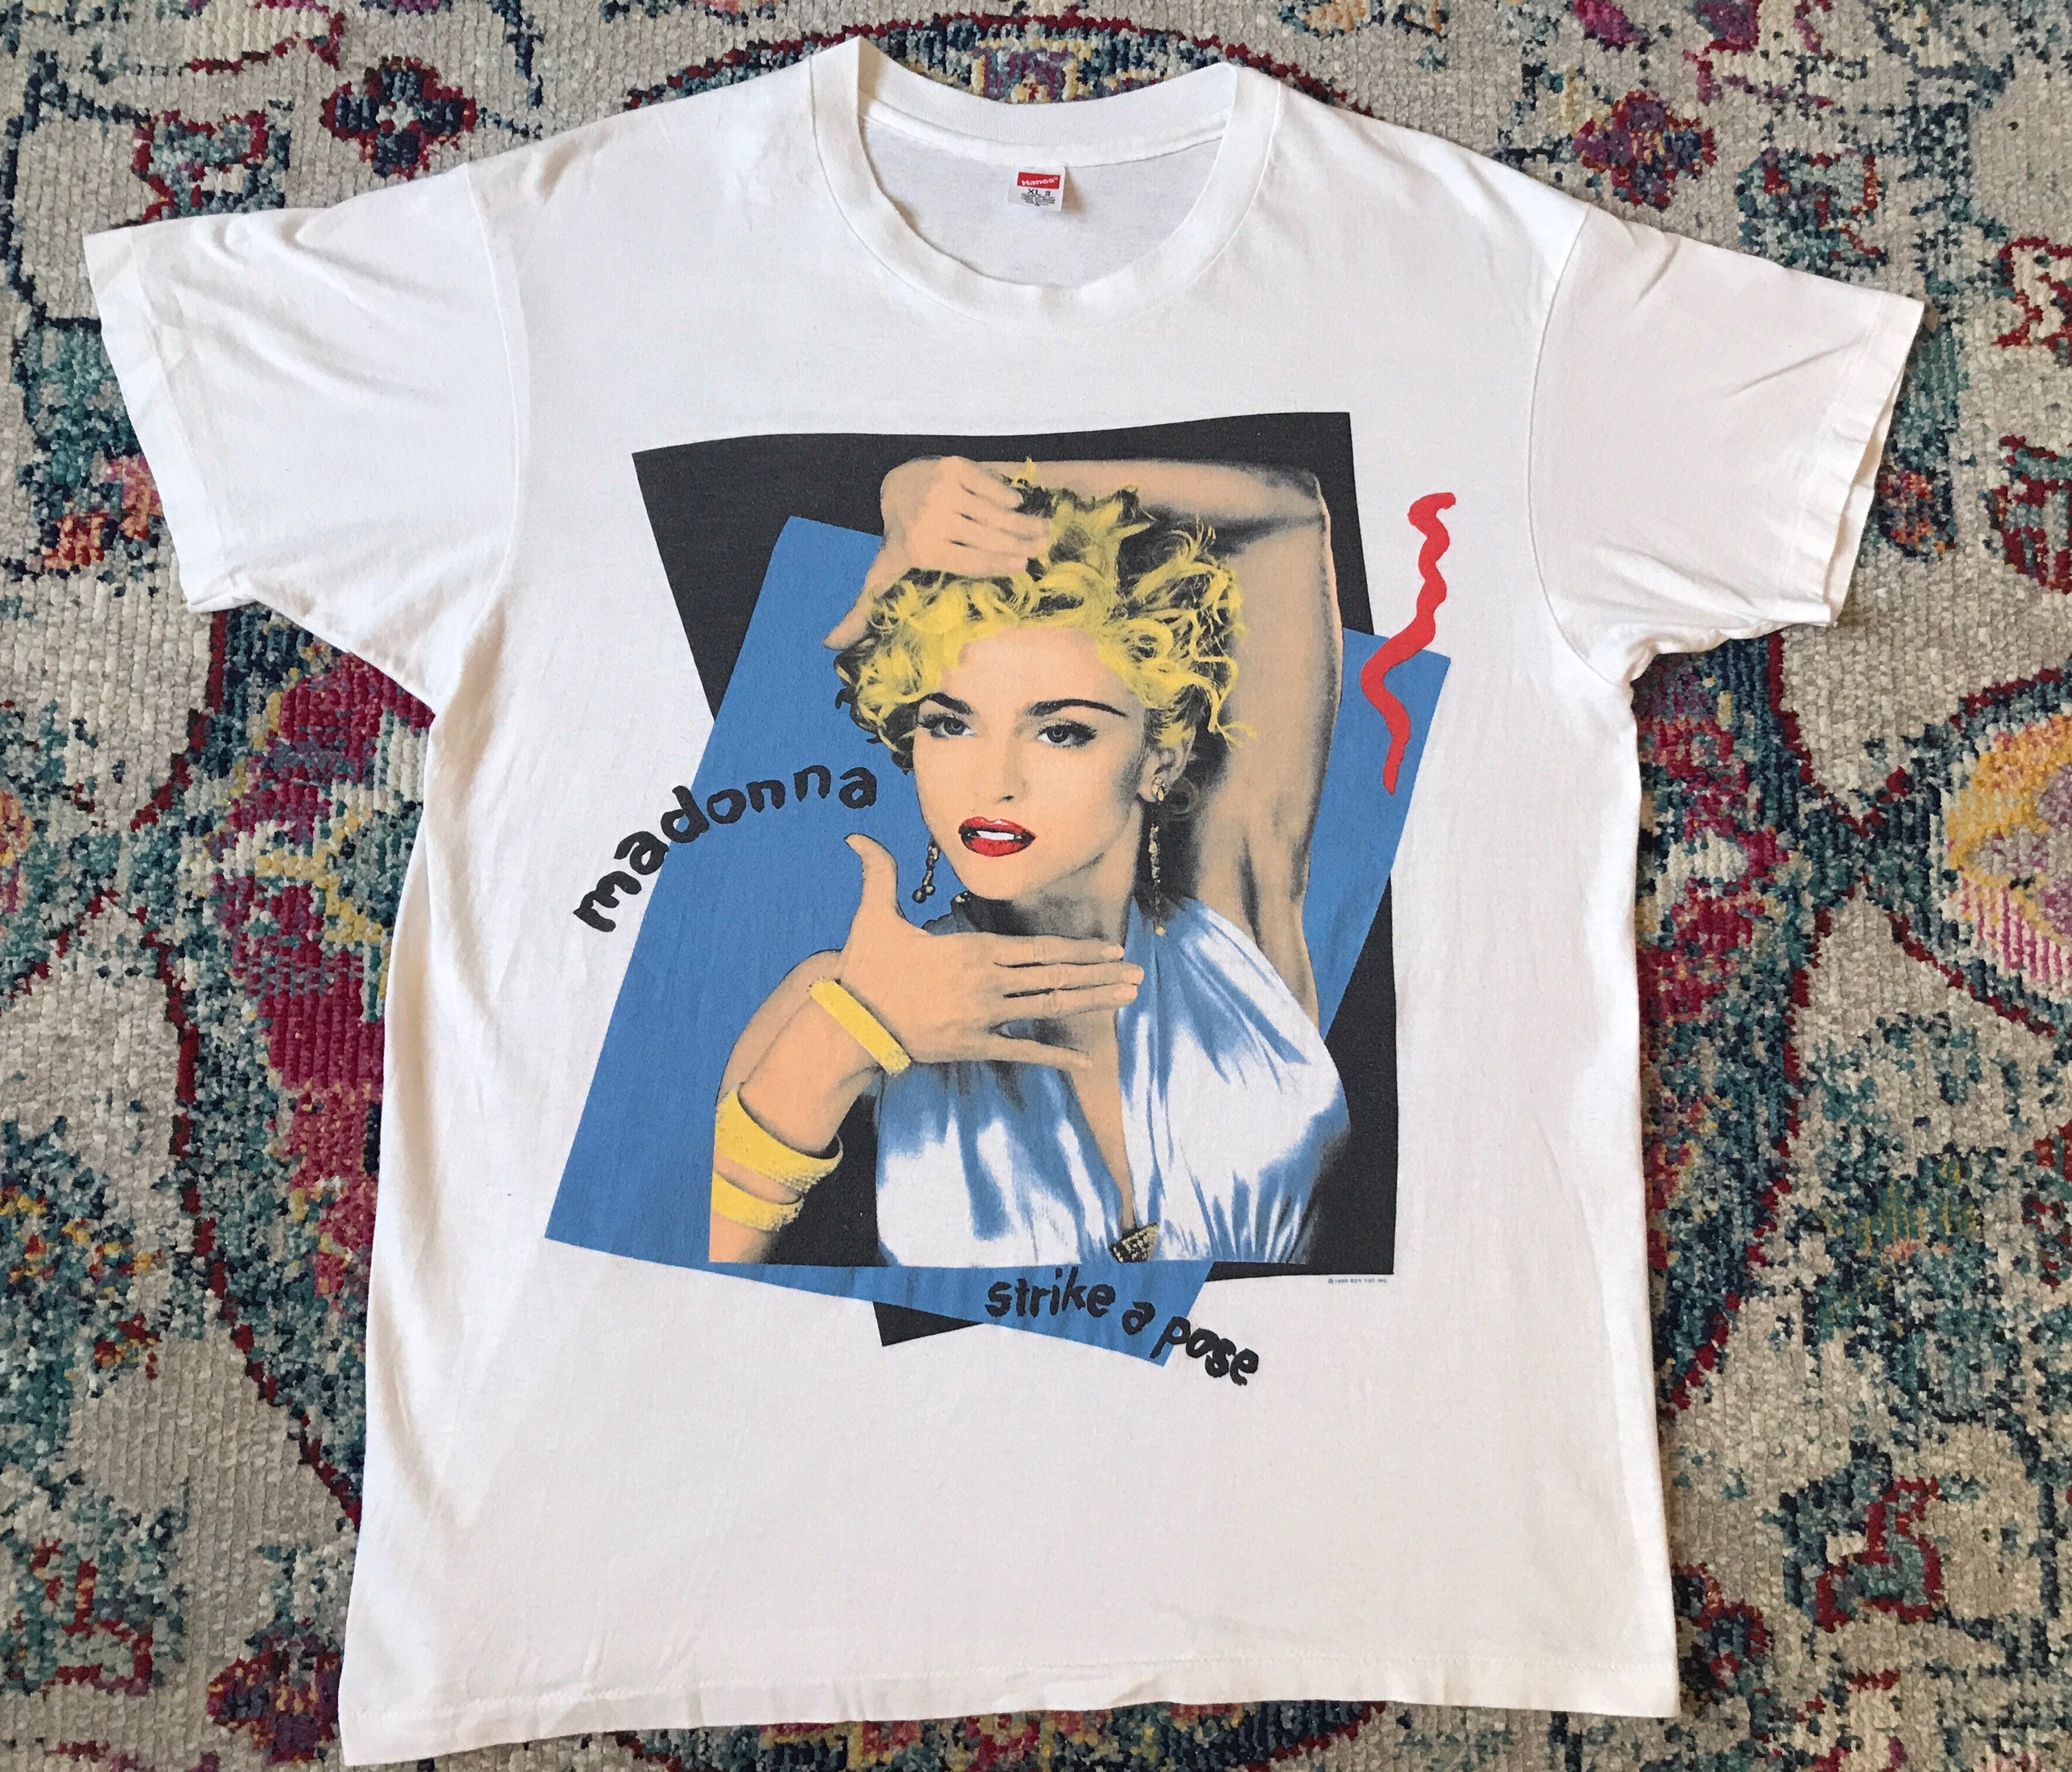 Discover Vintage Madonna Strike a Pose 1990 Blond Ambition Tour Shirt